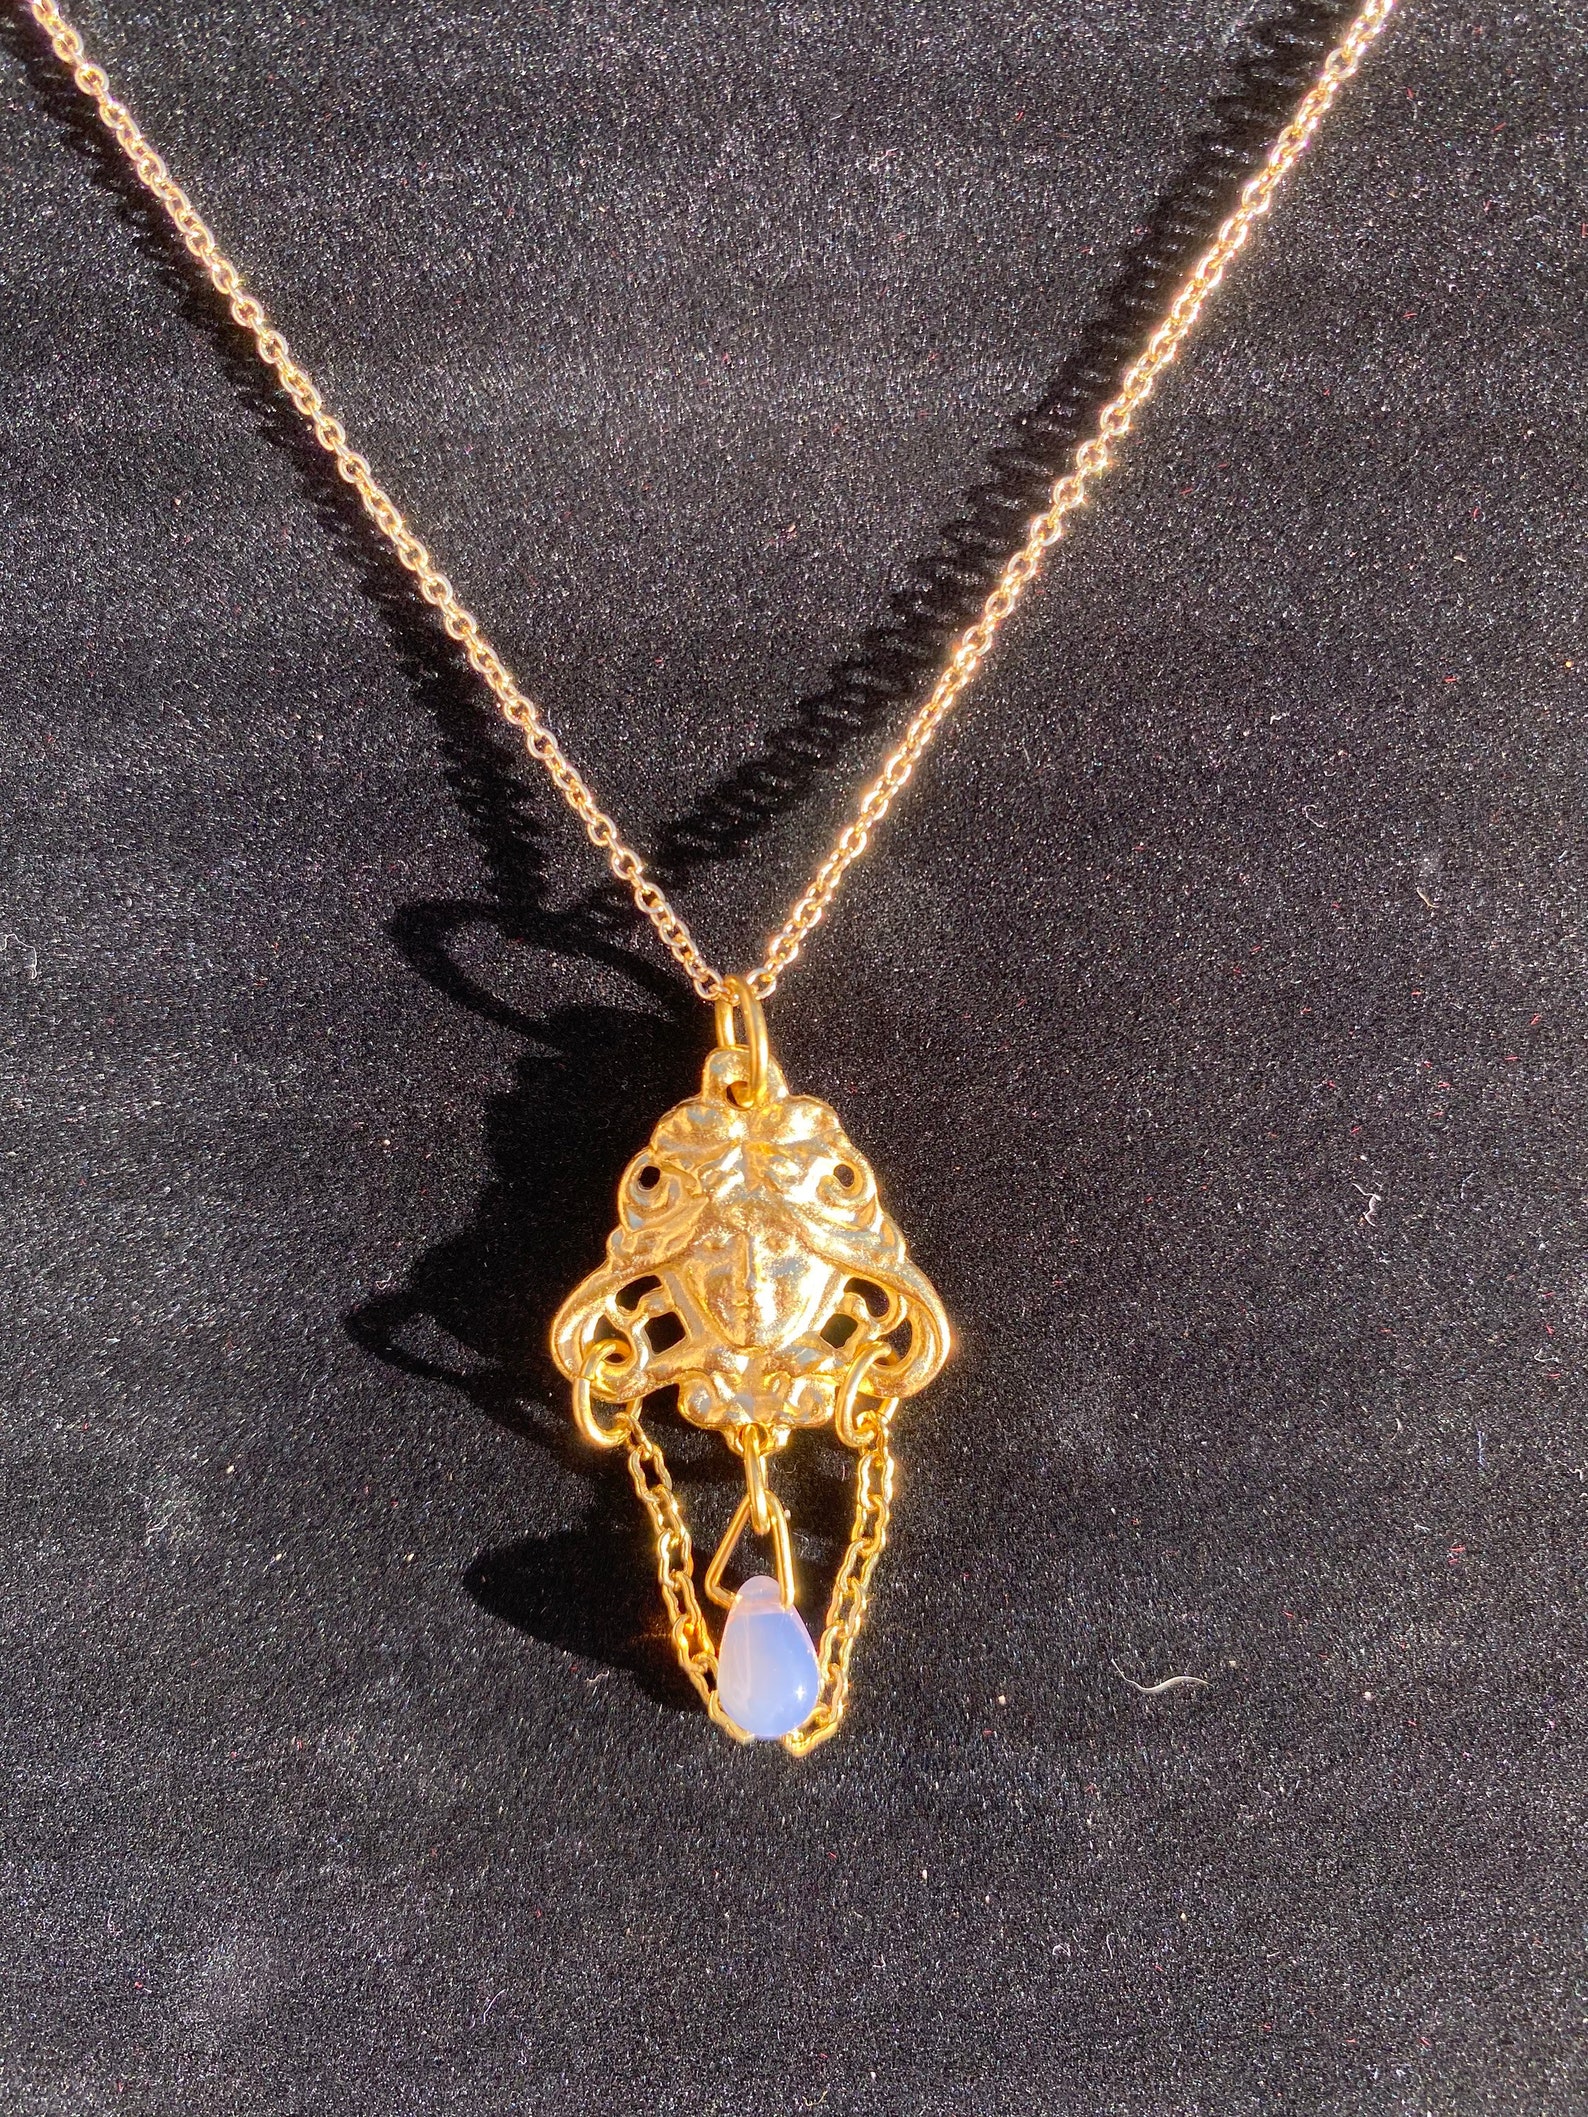 Medusa charm necklace | Etsy